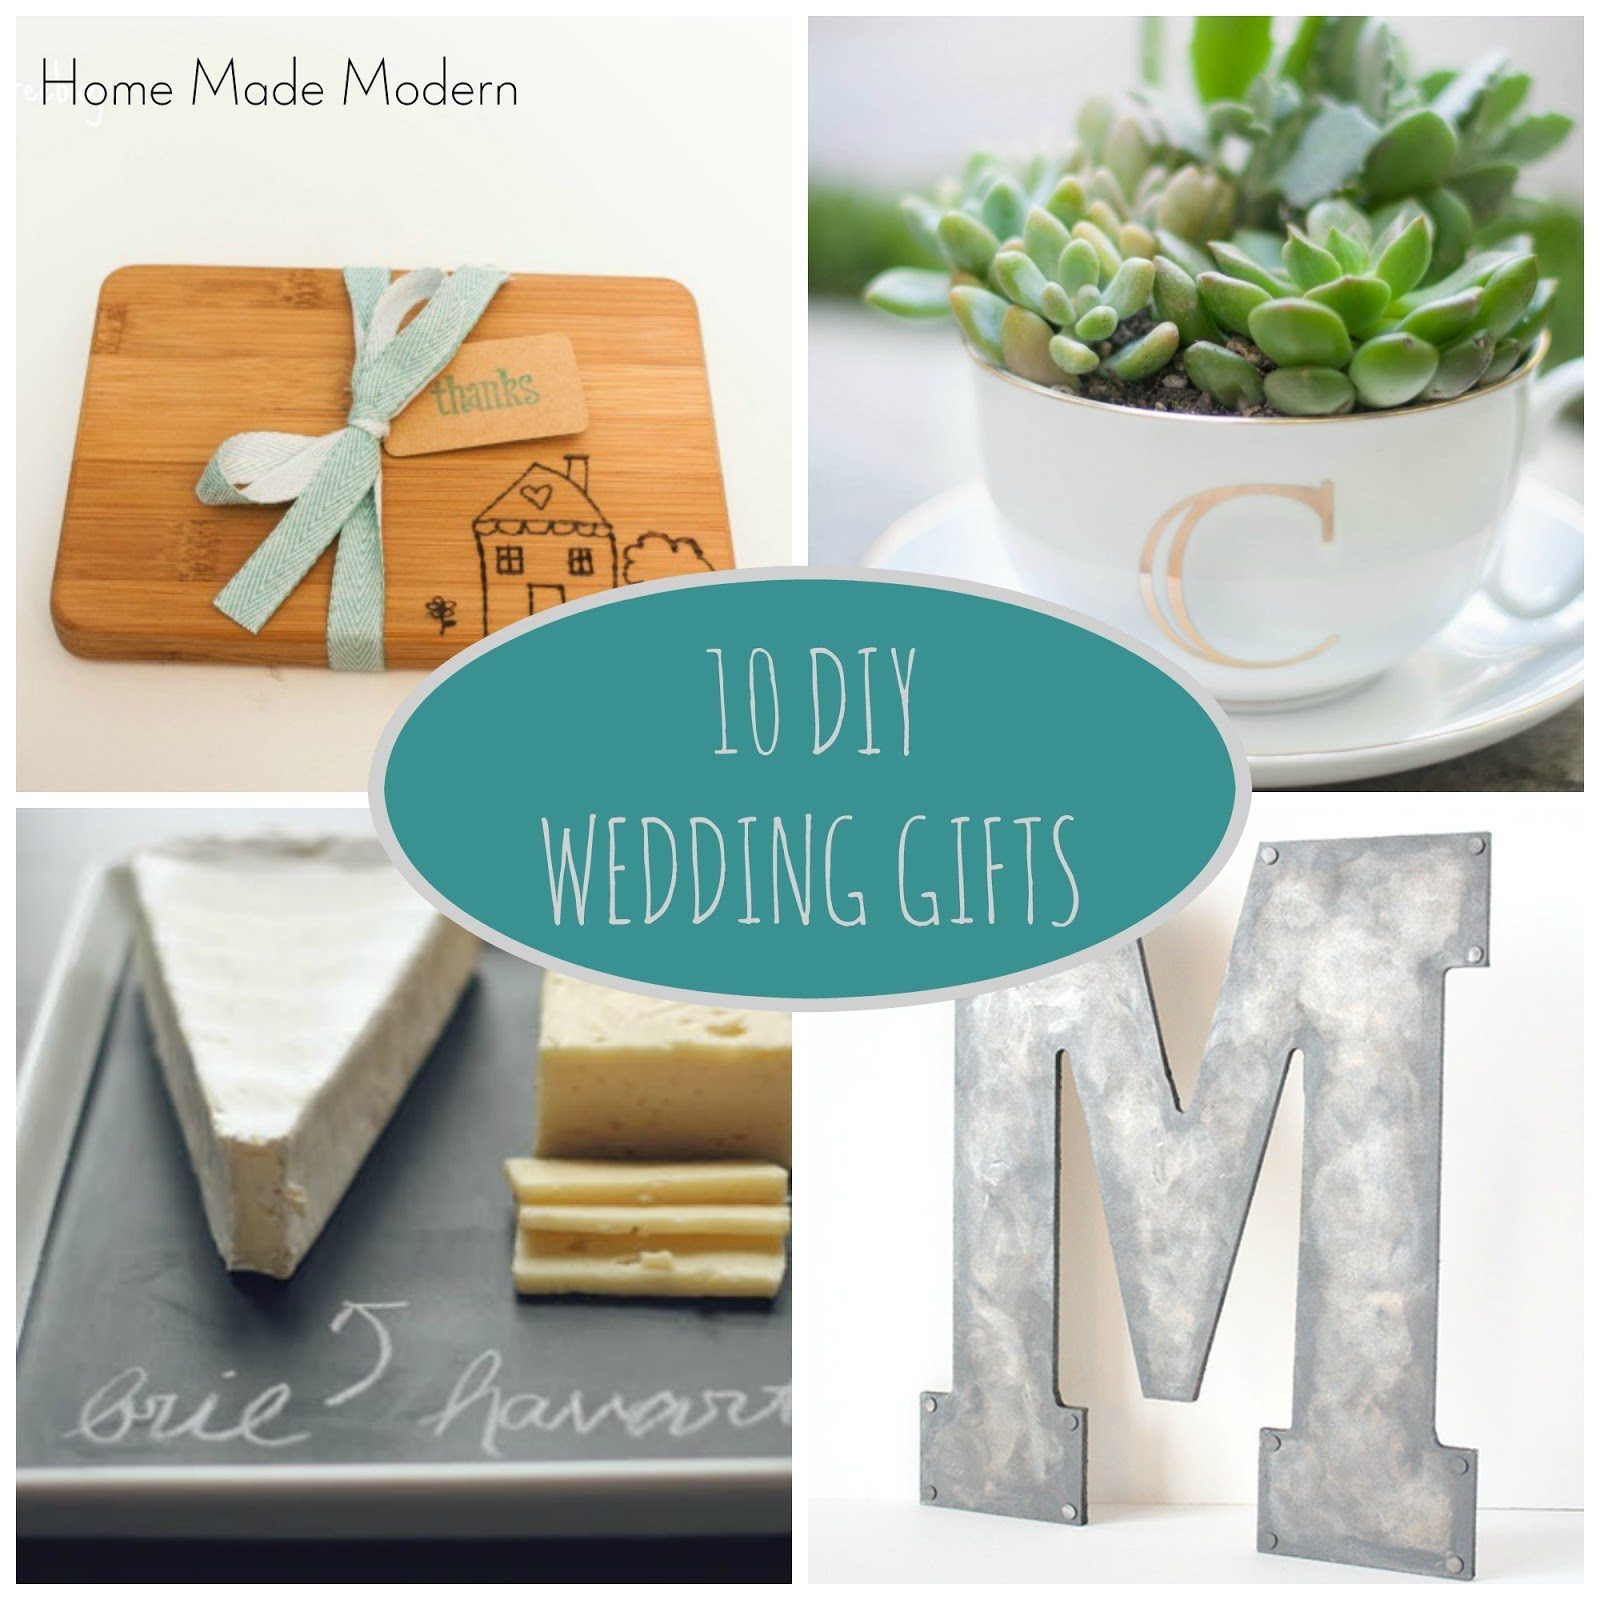 Homemade Wedding Gifts
 DIY Wedding Gifts Home Made Modern